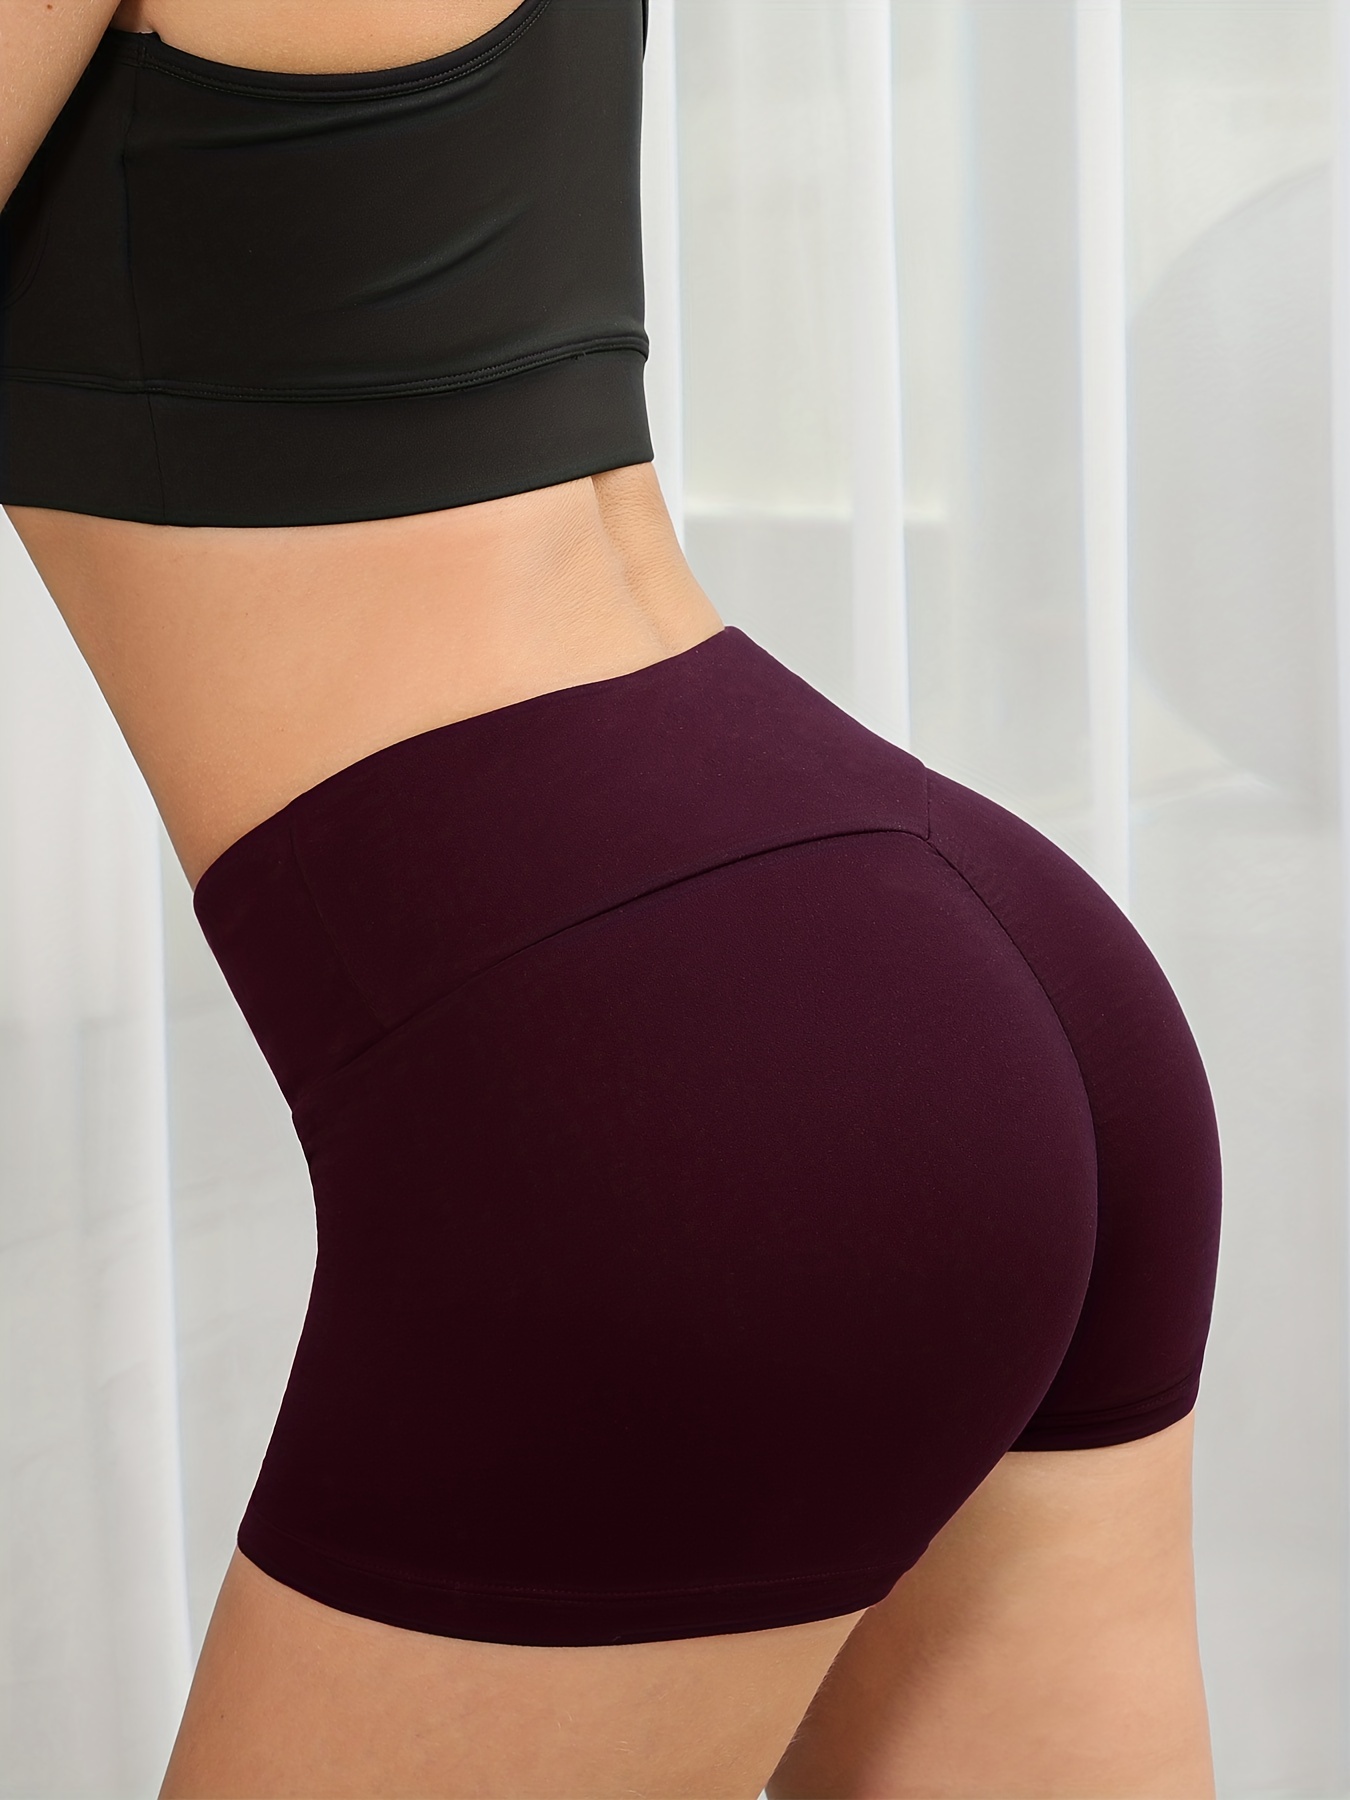 Women's High Waisted Yoga Shorts Booty Scrunch Butt Lifting Tummy